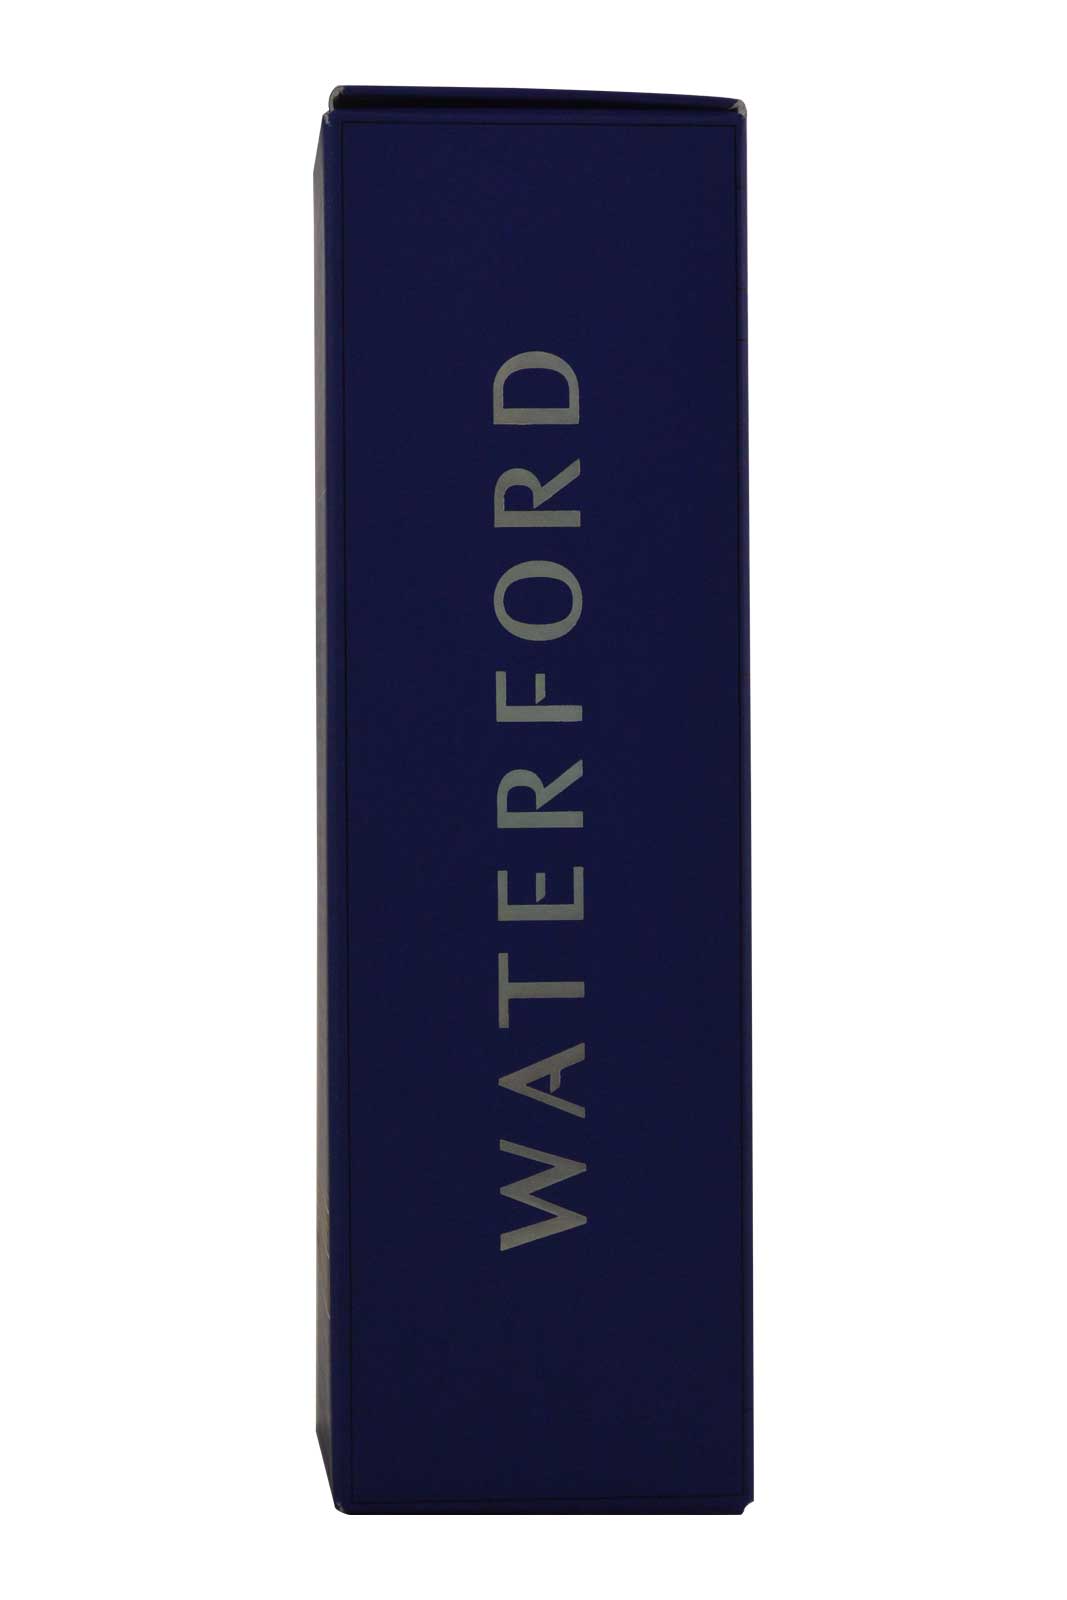 Waterford Single Farm Sheestown Edition 1.1